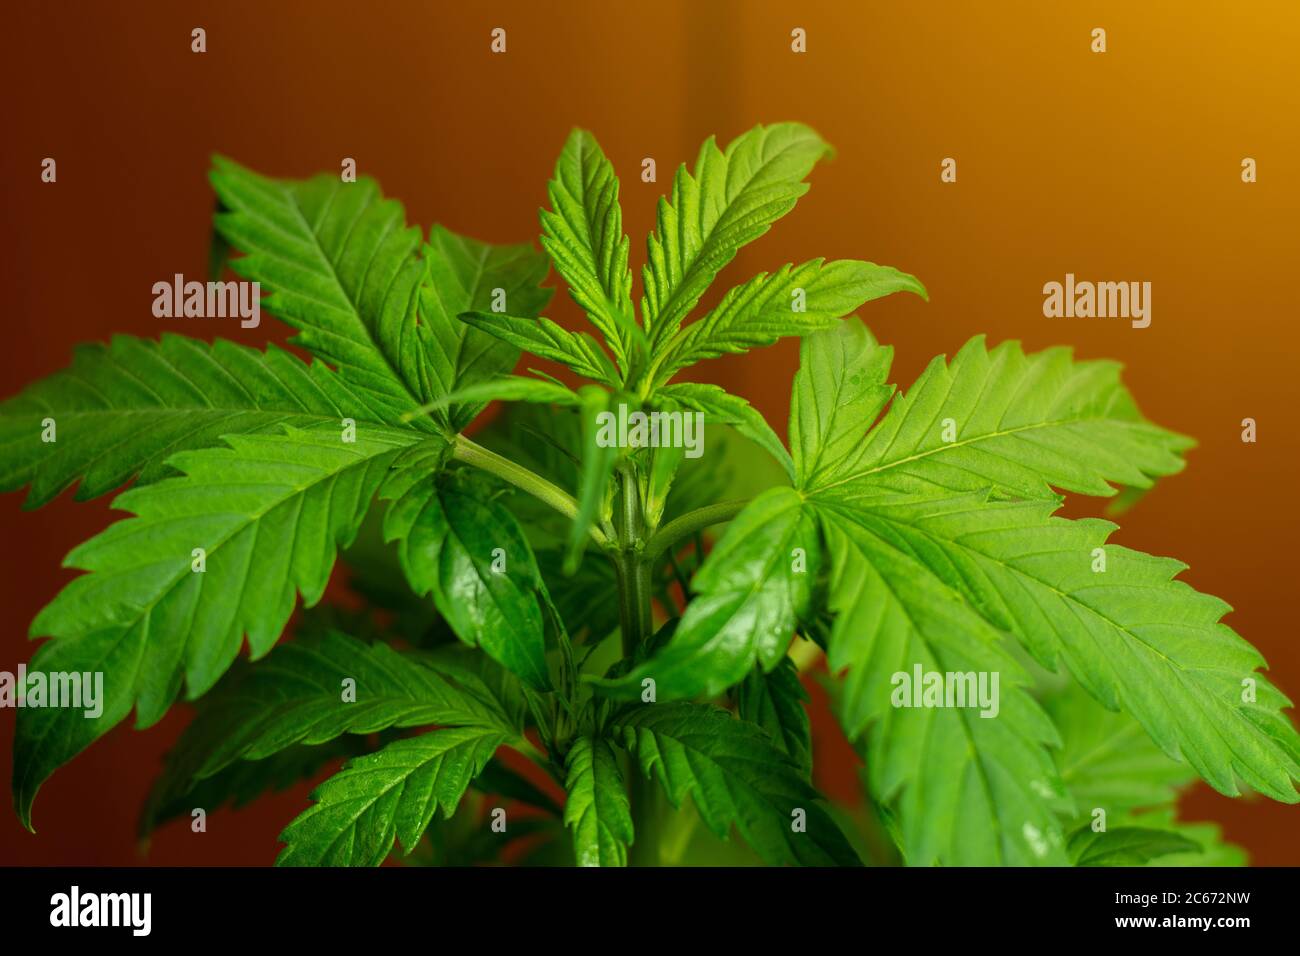 Marijuana plant leaves photography. Medical recreational cannabis growing Stock Photo